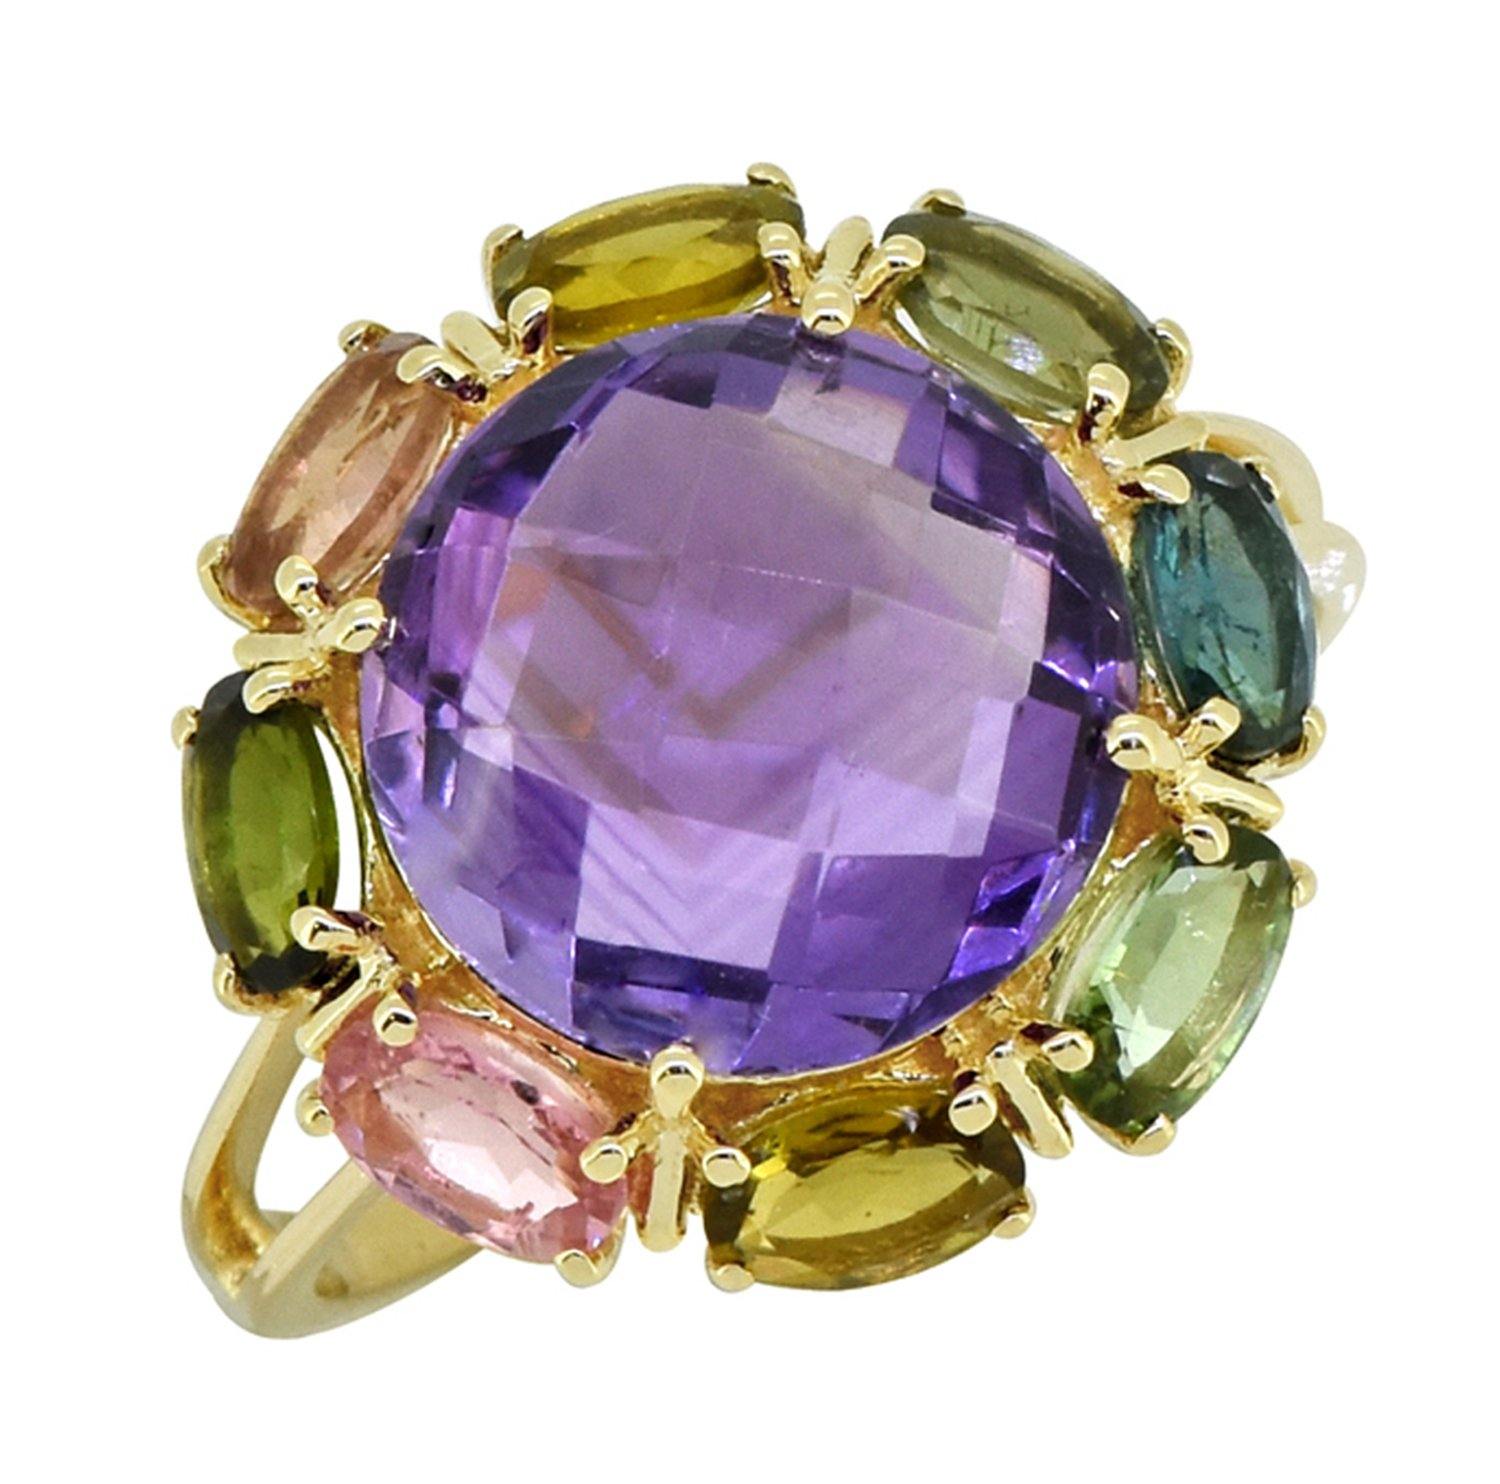 7.54 Ct Purple Amethyst Multi Tourmaline Solid 14k Yellow Gold Cluster Ring Jewelry - YoTreasure